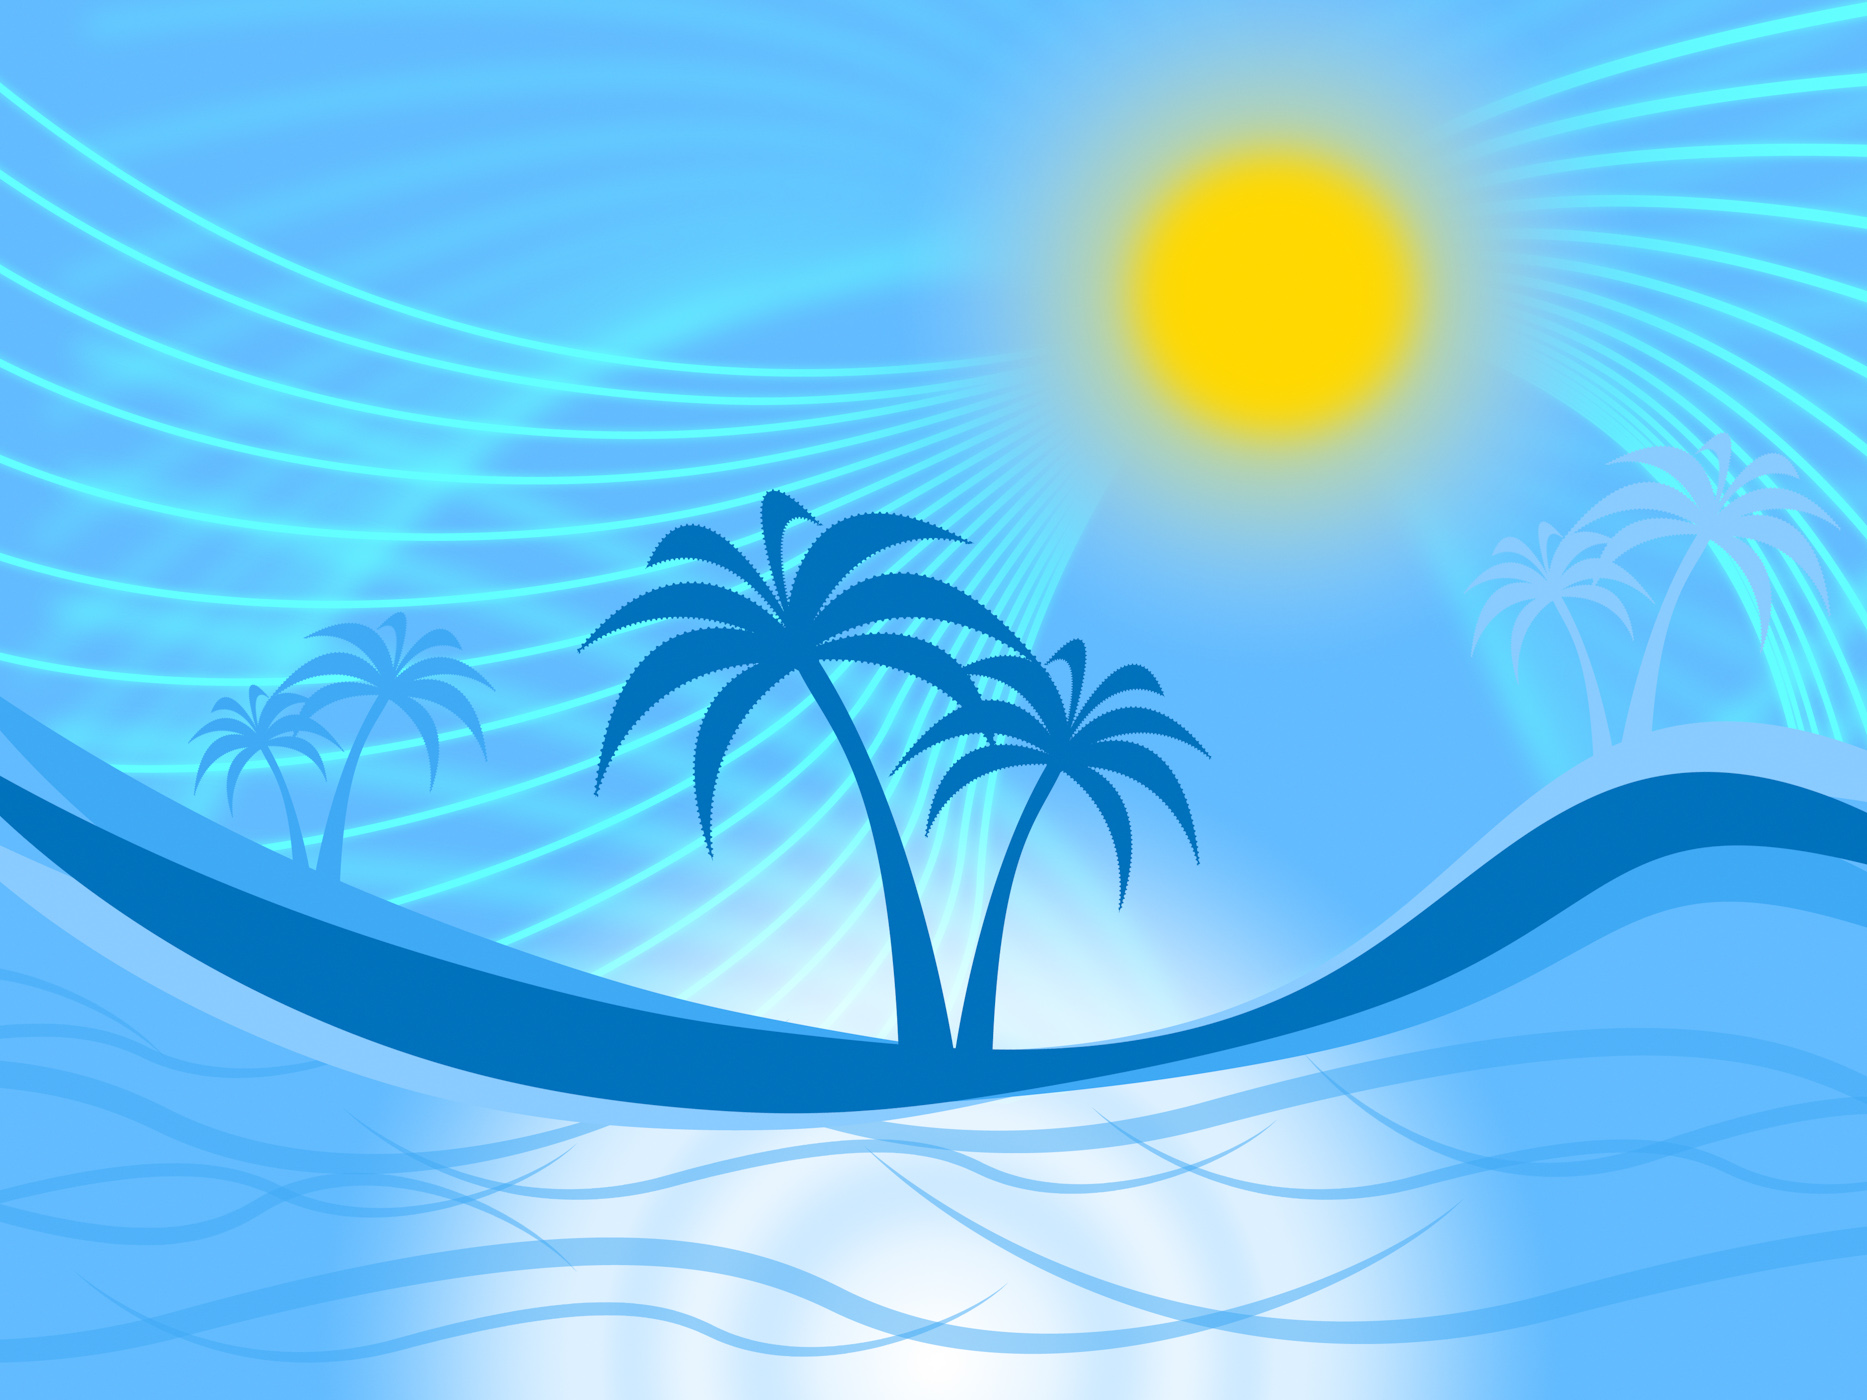 Palm tree indicates tropical climate and coastline photo